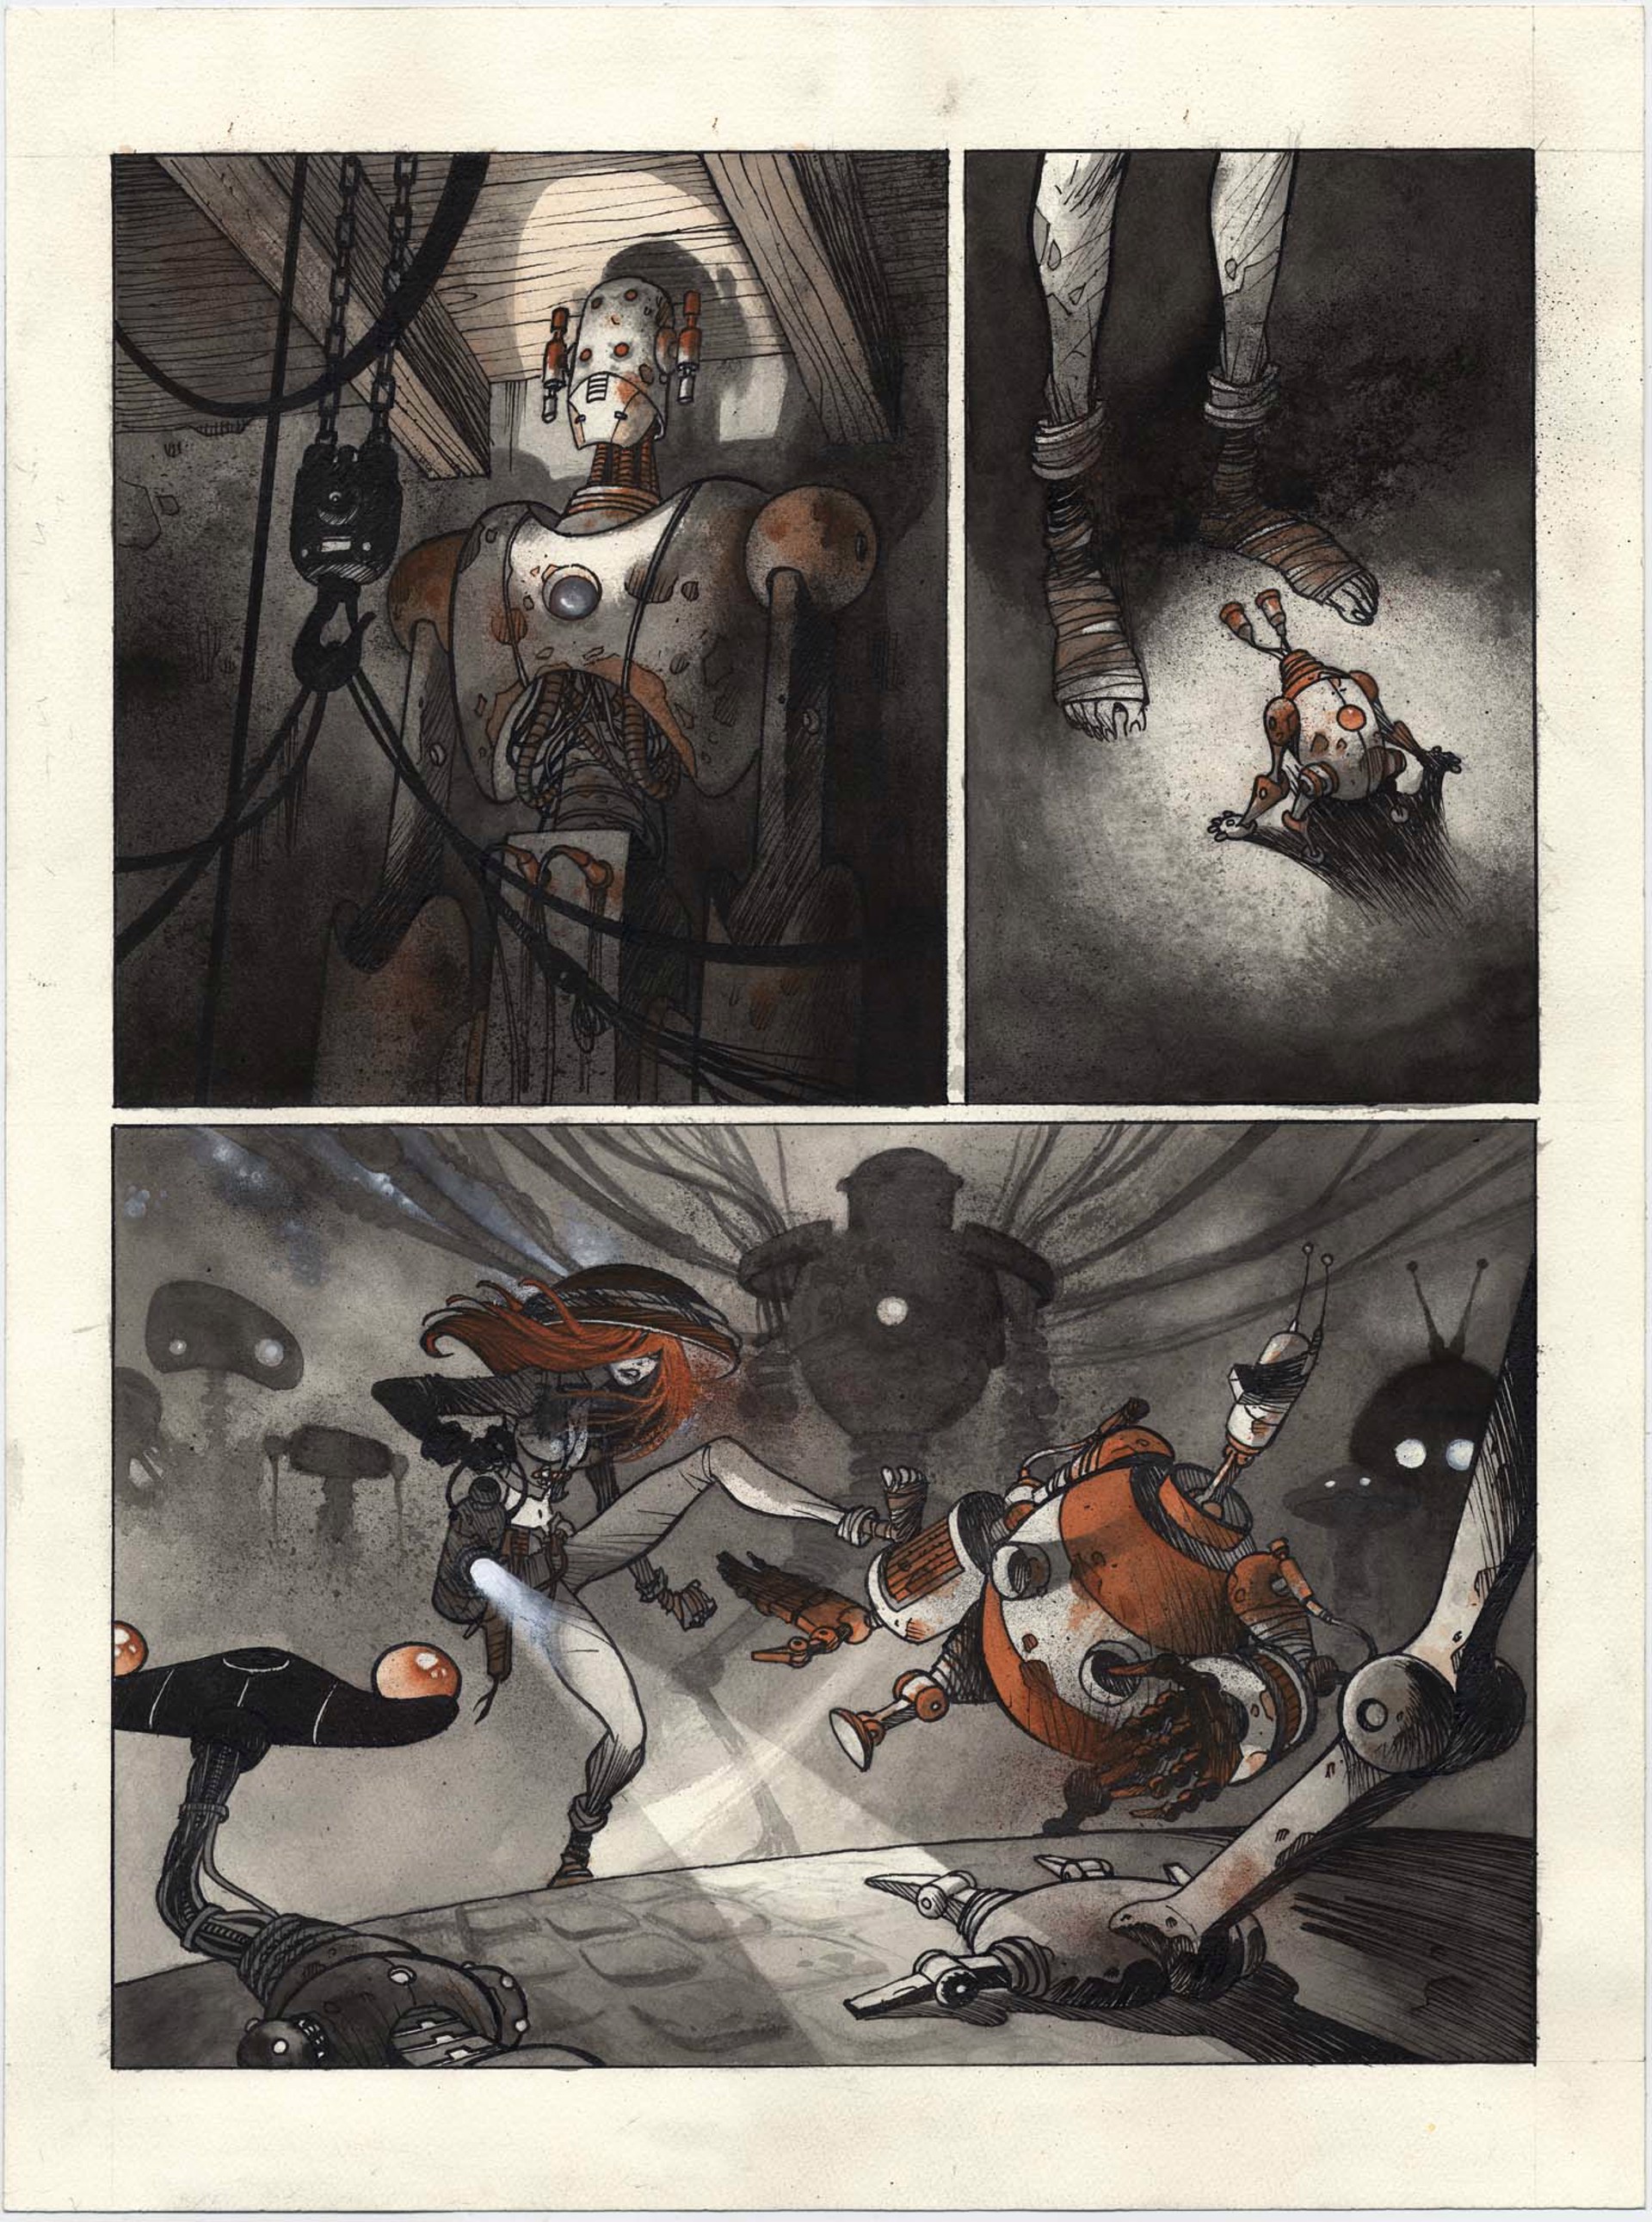 Anita Comics #1 - "Entrez : Sig 14" Page #1 - Chapter 3: "Journal d'une Emmerdeuse" by Didier David (Cromwell)